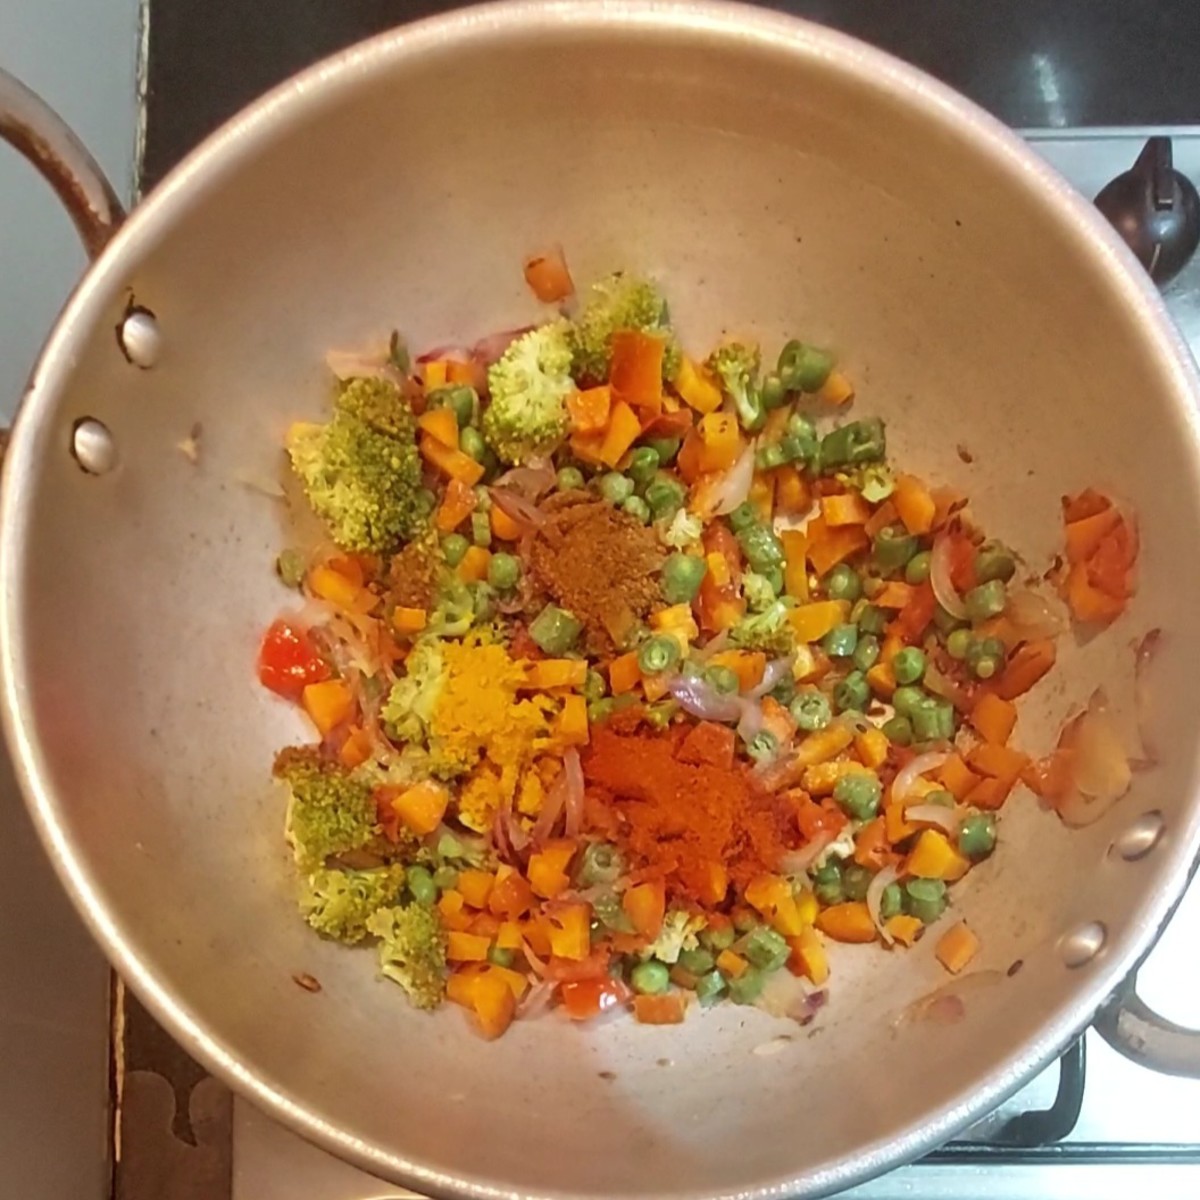 Add 1/2 teaspoon turmeric  powder, 1 teaspoon red chili powder, 1/2 teaspoon pav bhaji masala, mix and combine well with the vegetables.